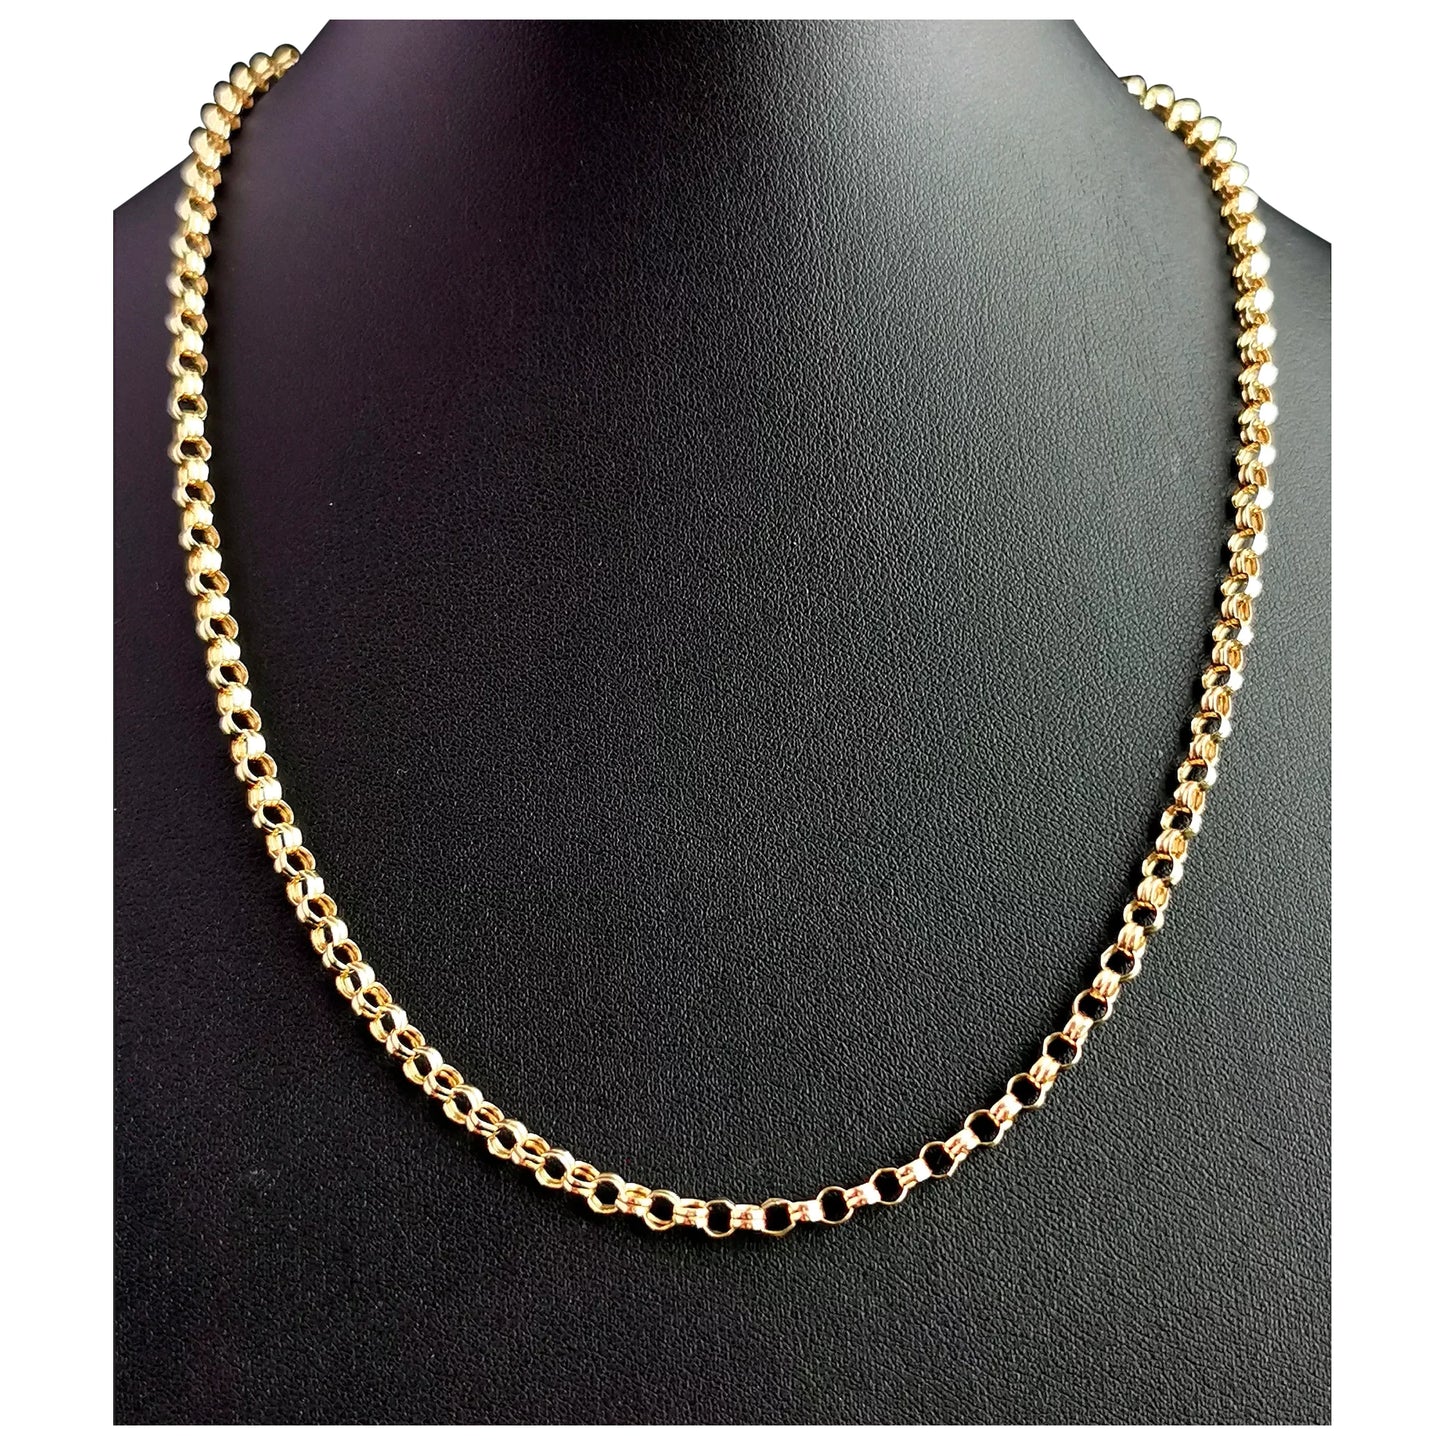 Vintage 9ct gold rolo link chain necklace, belcher link